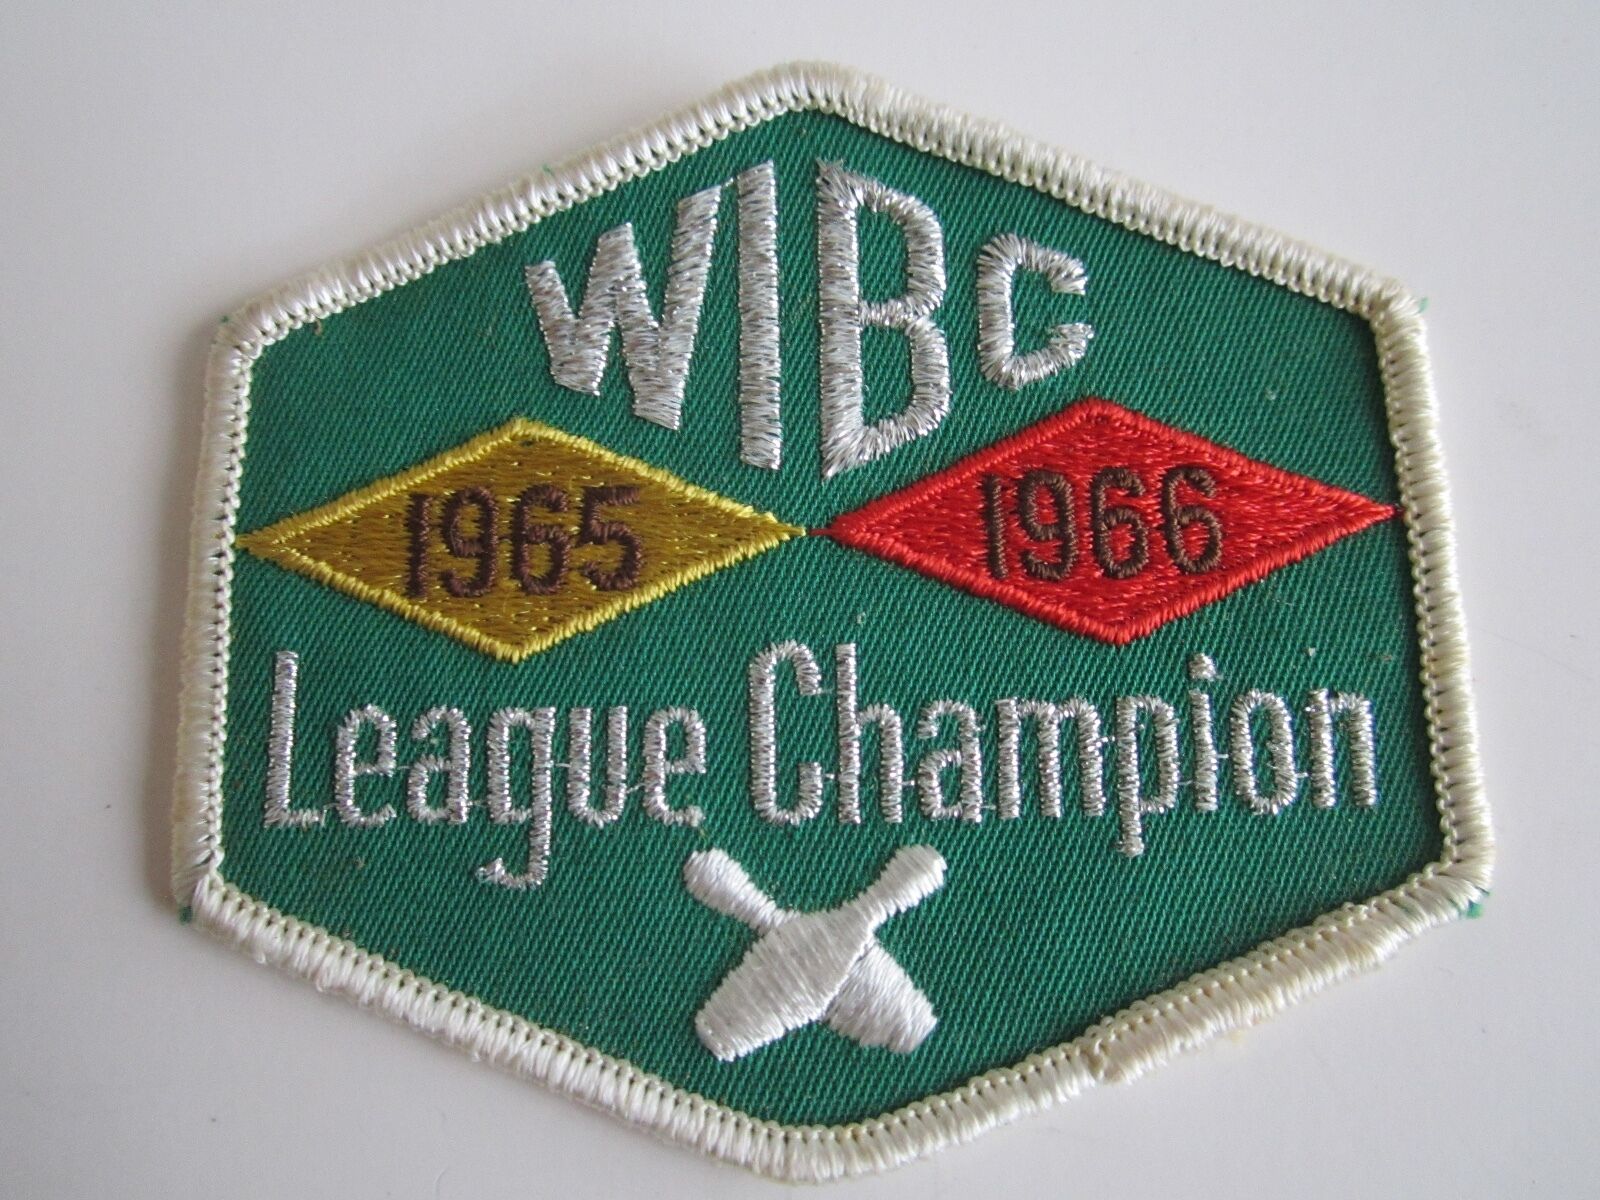 1965 - 1966 WIBC LEAGUE CHAMPION PATCH - BOWLING - MINT CONDITION - TUB BMA